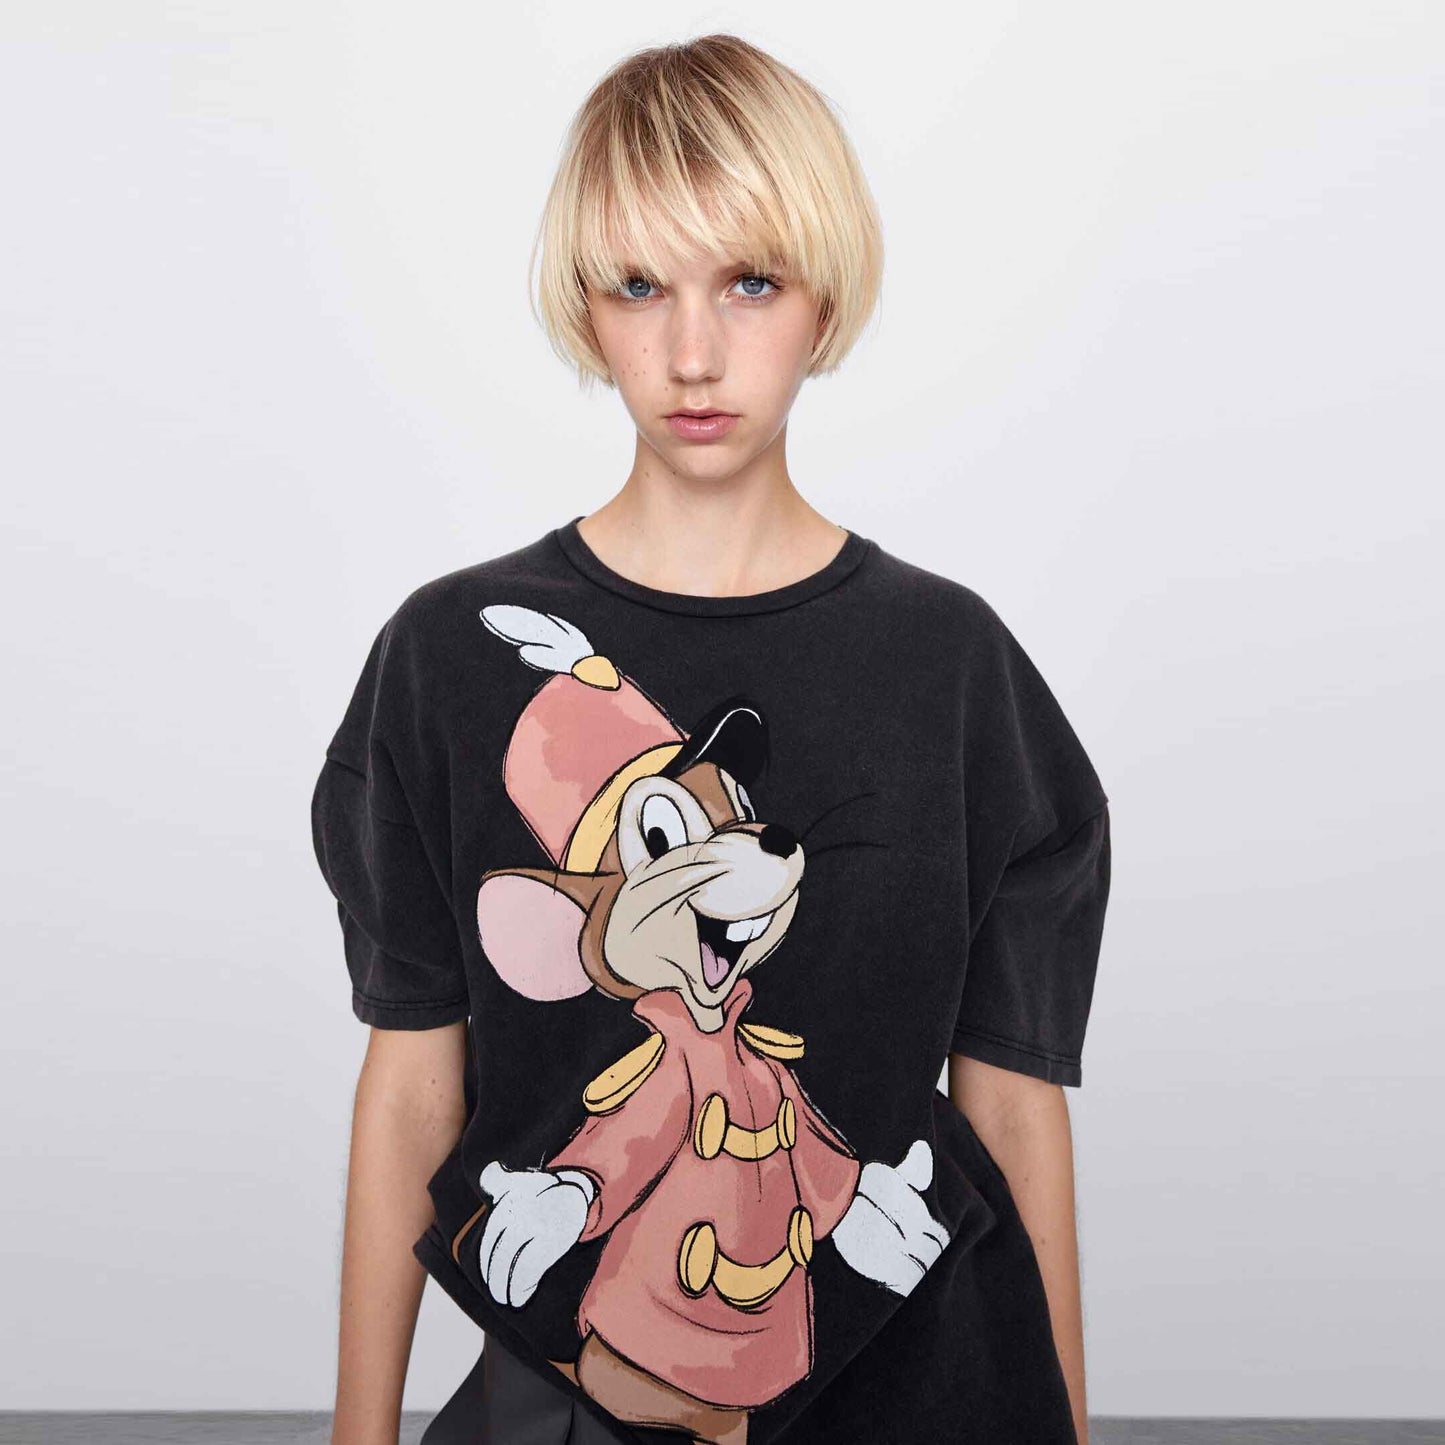 Zara Disney Dumbo Timothy Q. mouse t-shirt - size Small